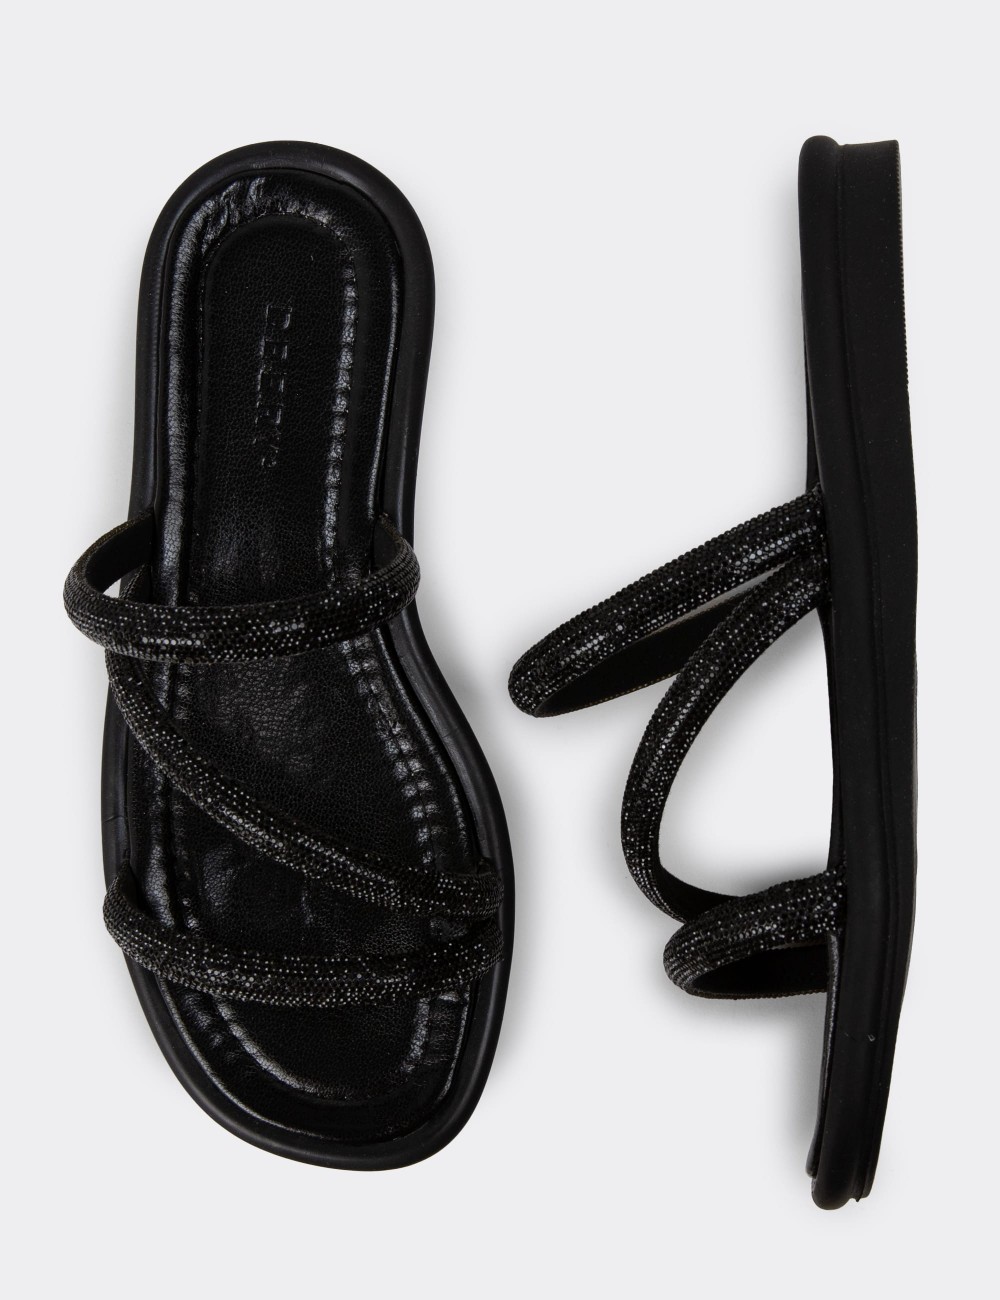 Black Sandals - K7514ZSYHC01